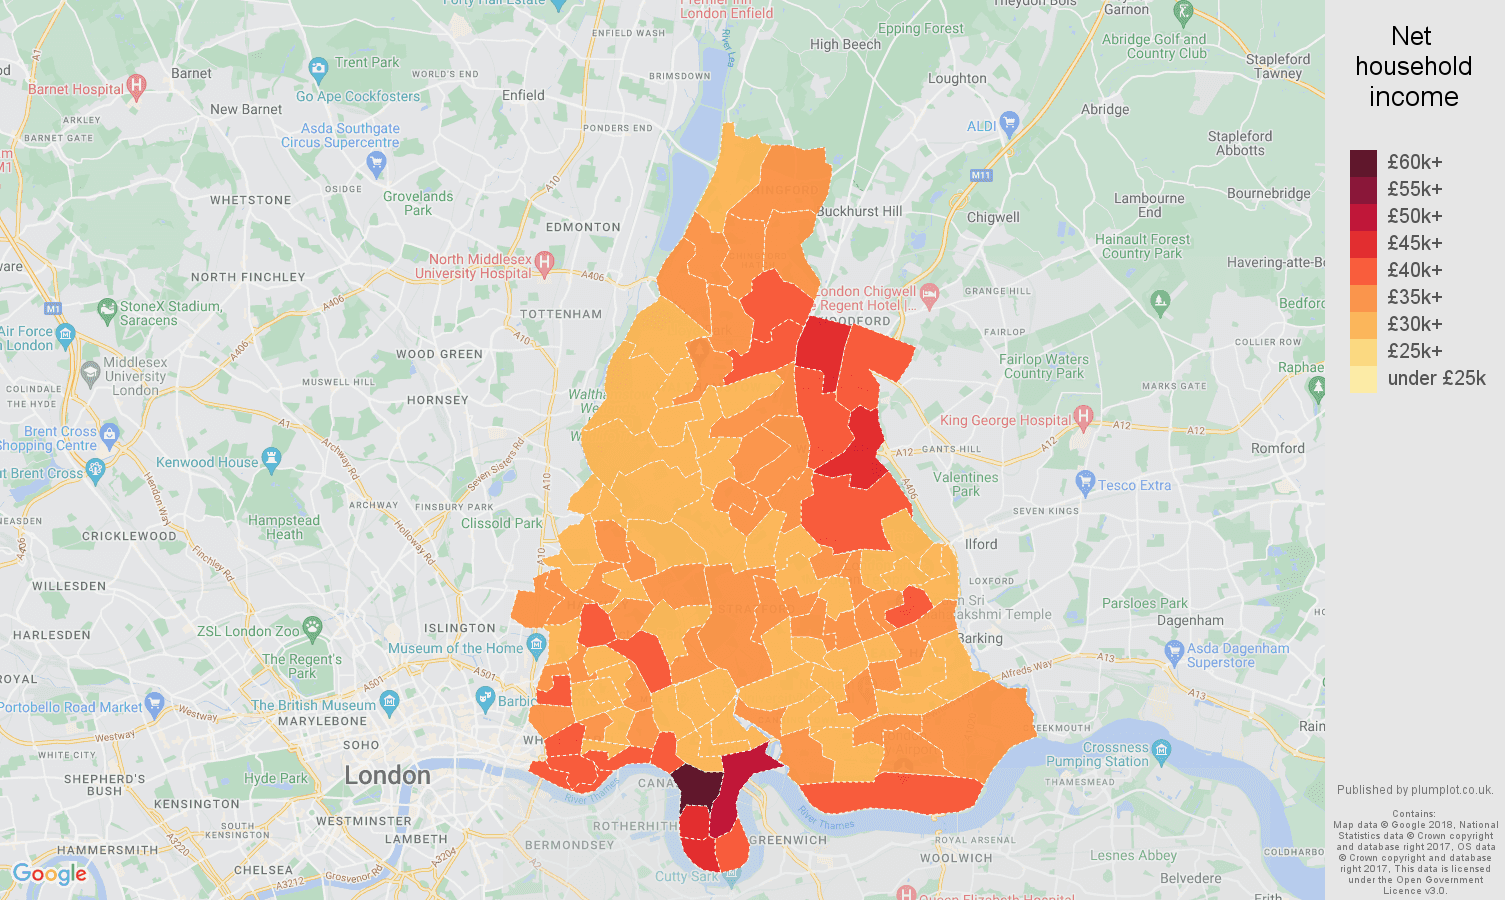 East London net household income map